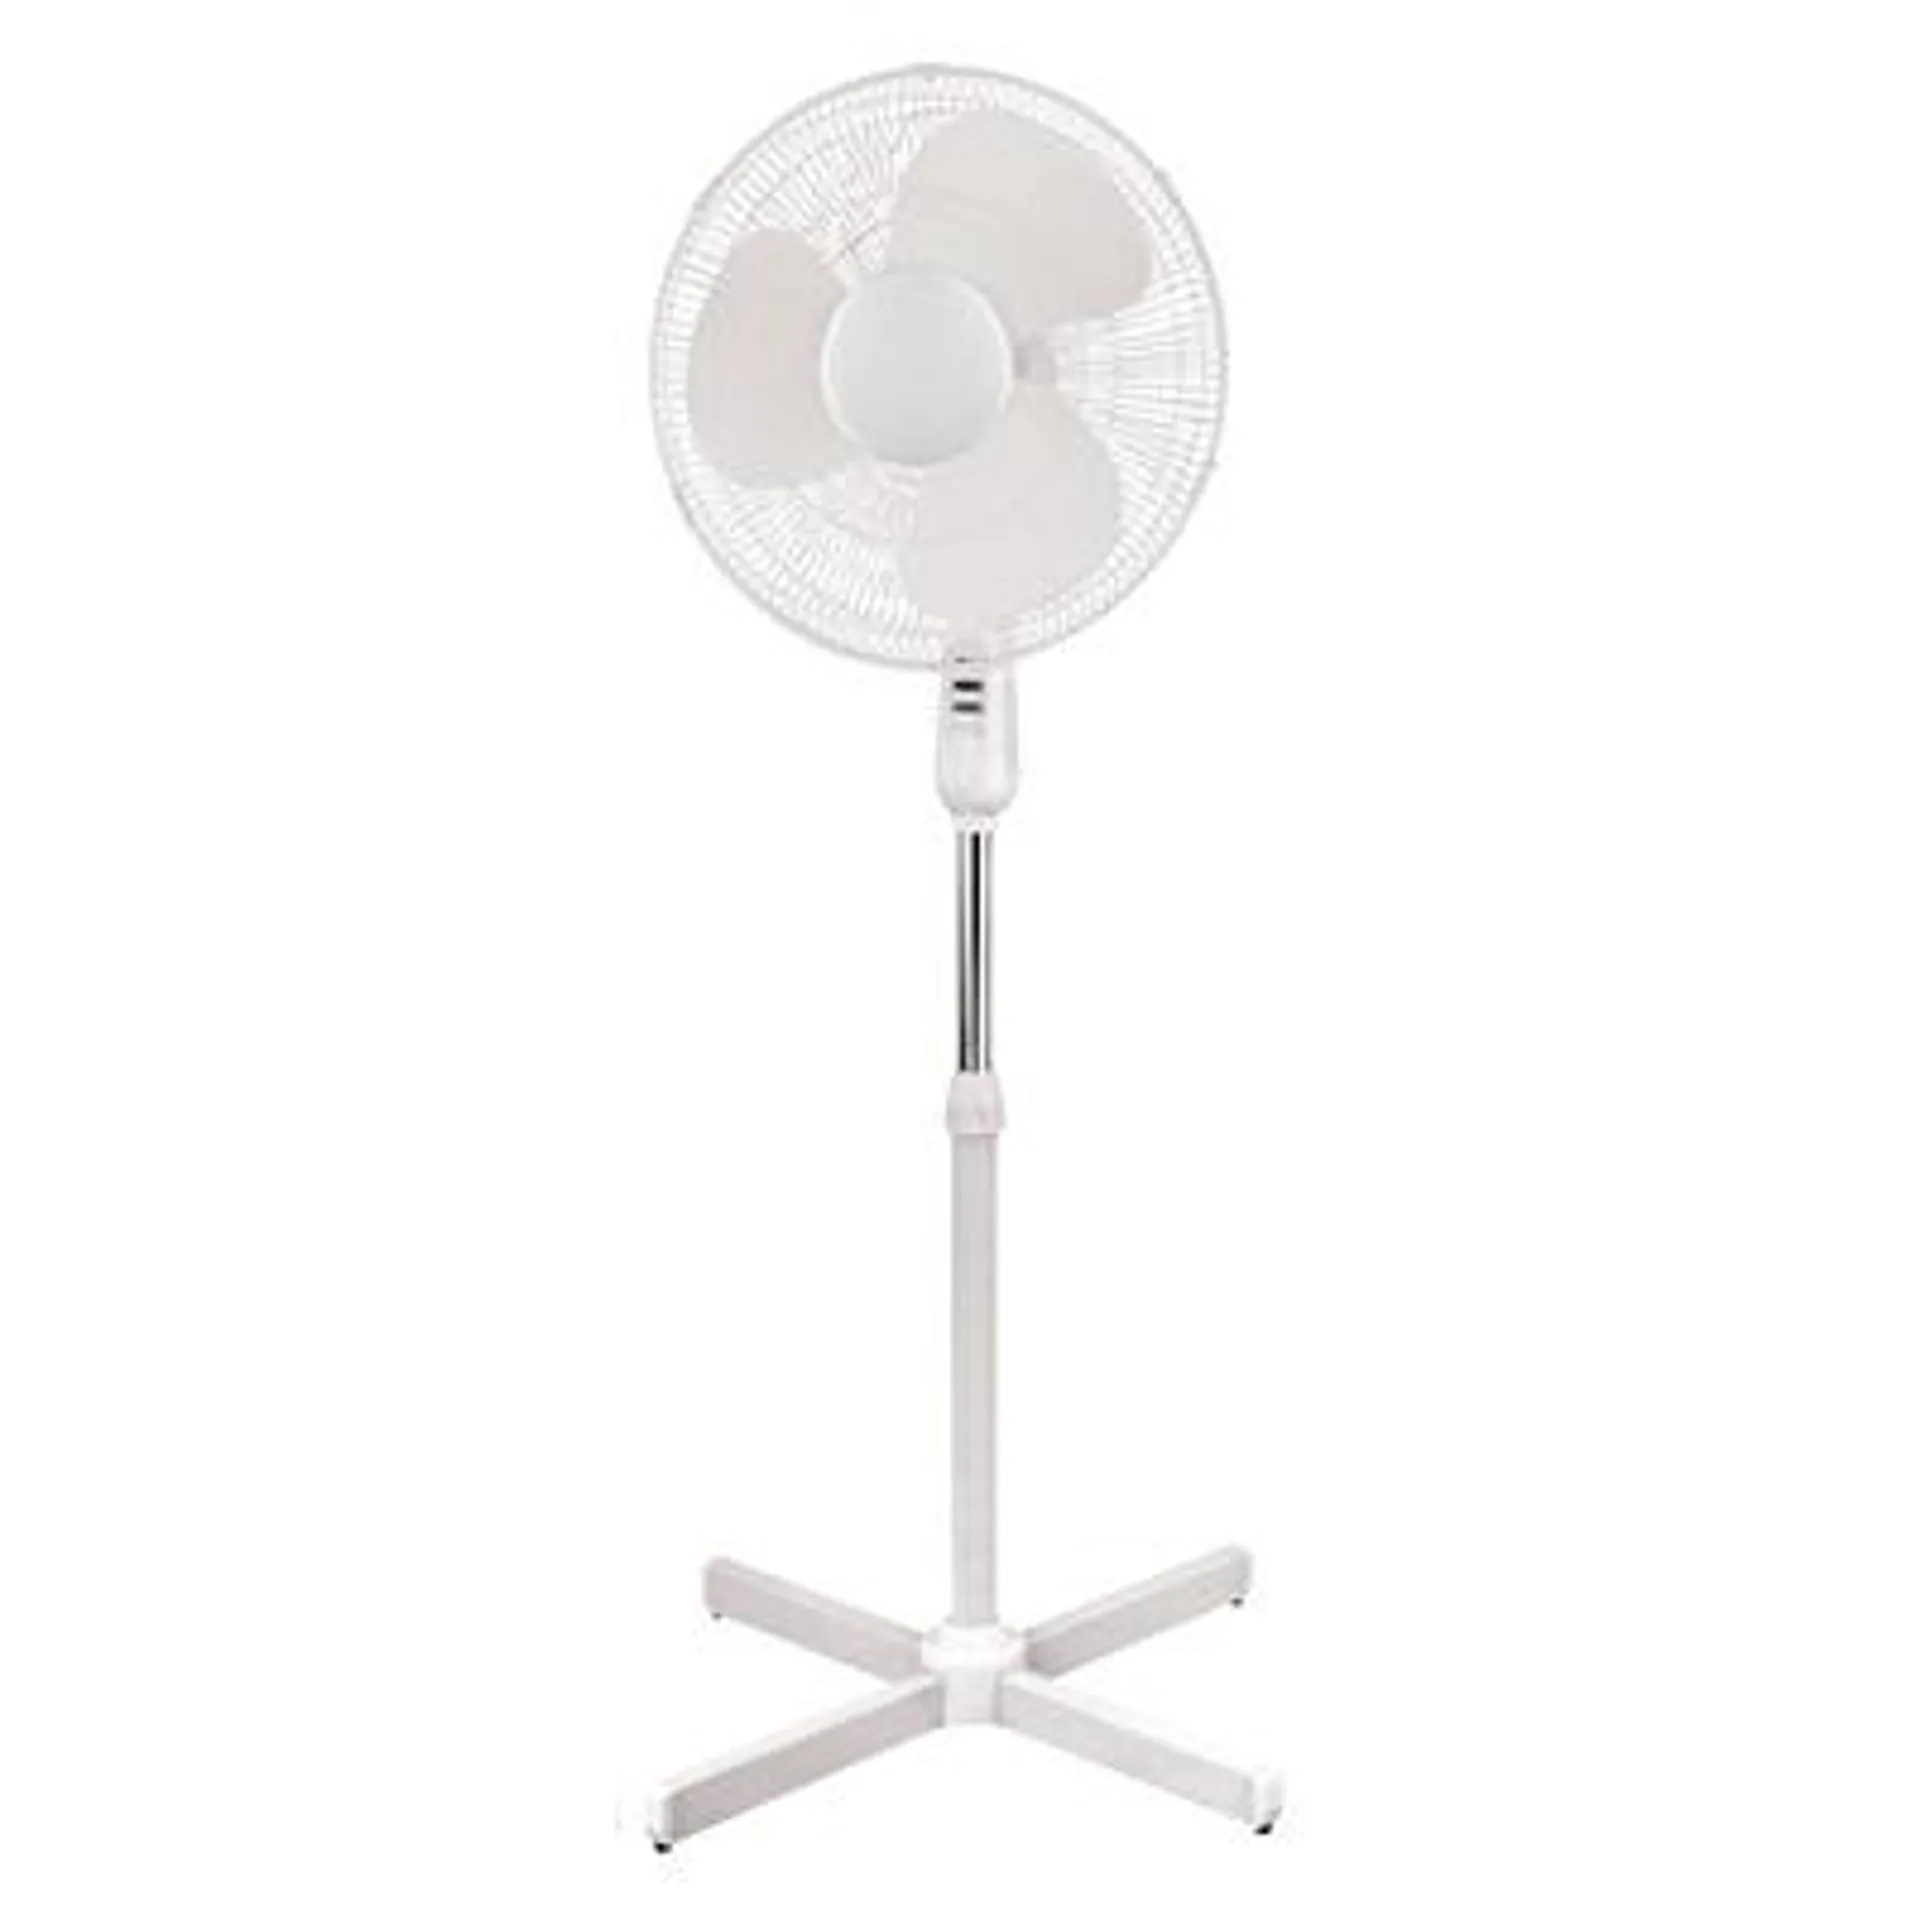 Cool Works 16” Oscillating Pedestal Fan